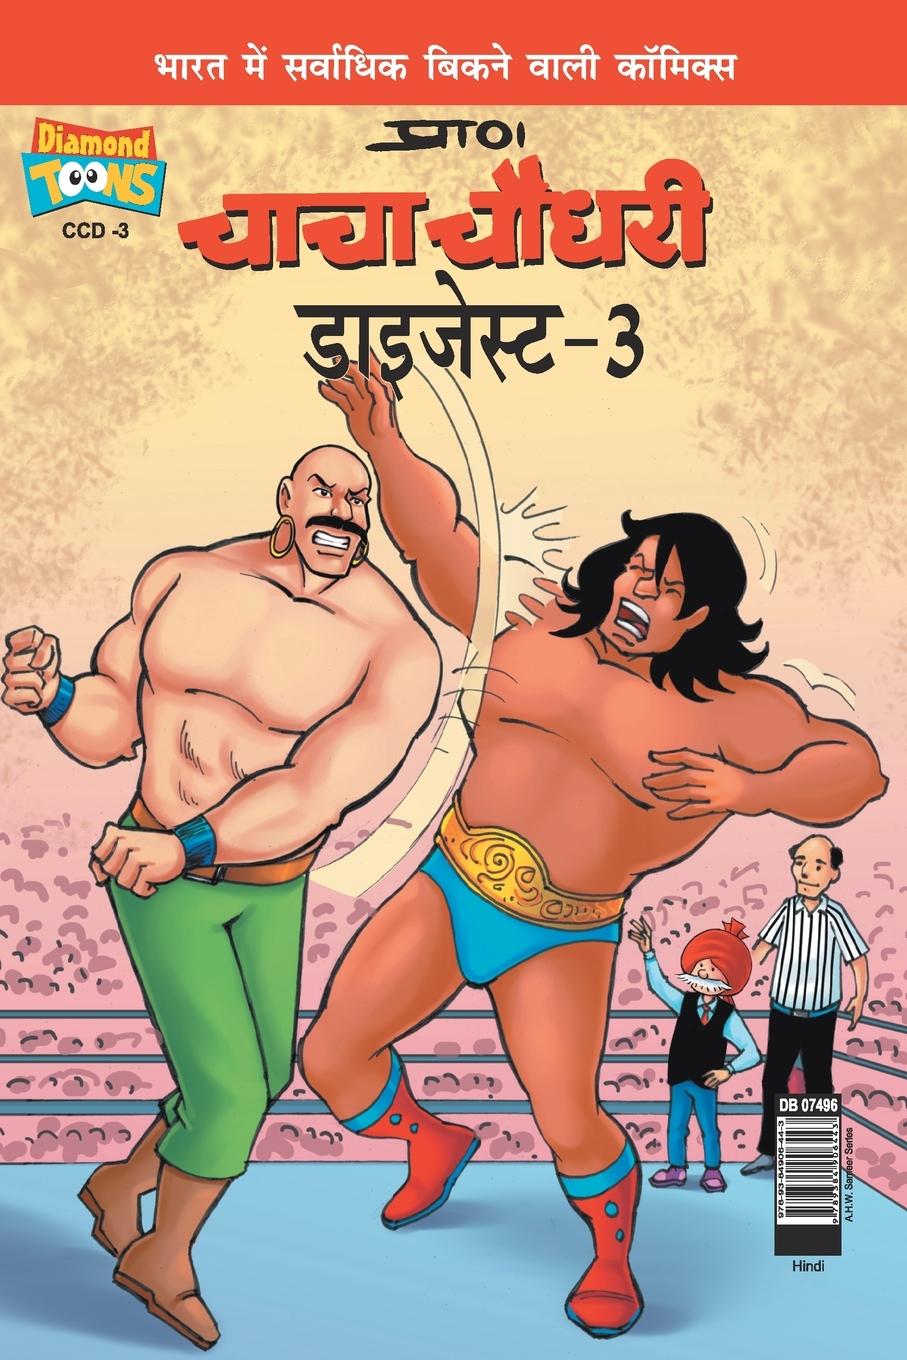 Book Chacha Chaudhary Digest -3 Pran's